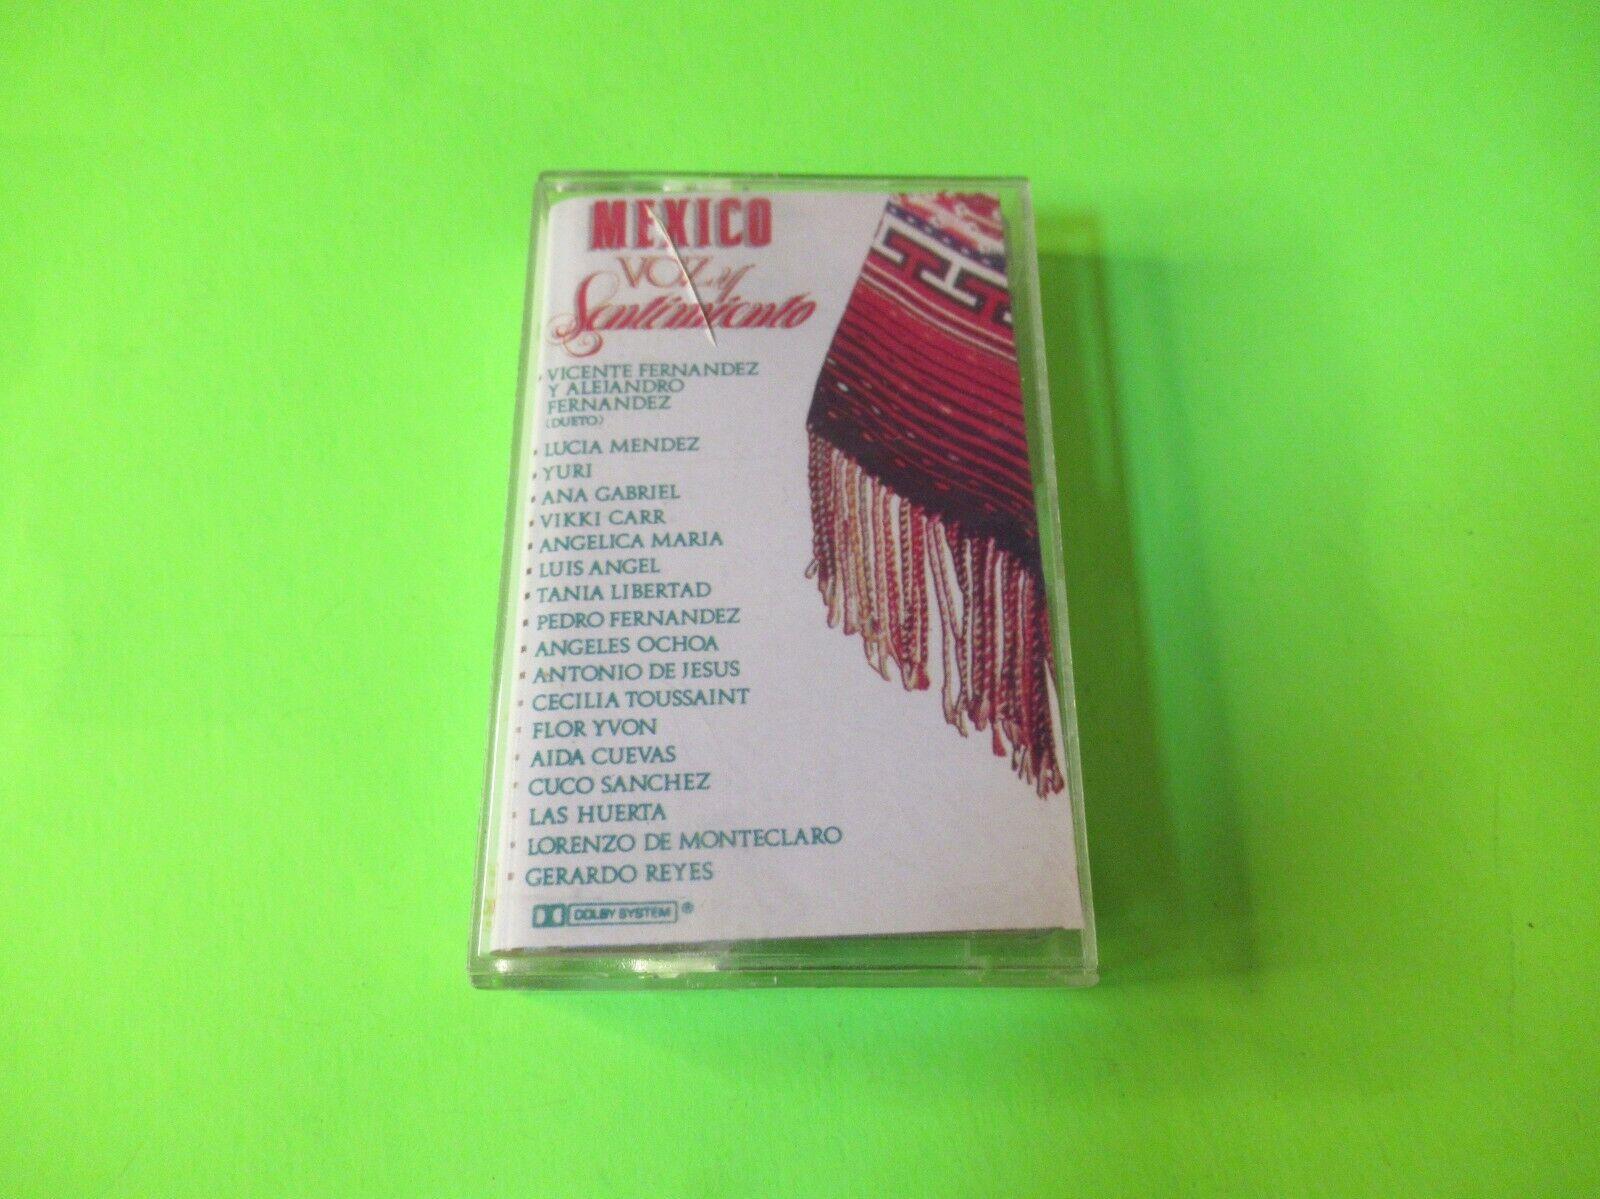 Mexico Voz Y Sentimiento Varios Cassette Tape Latin